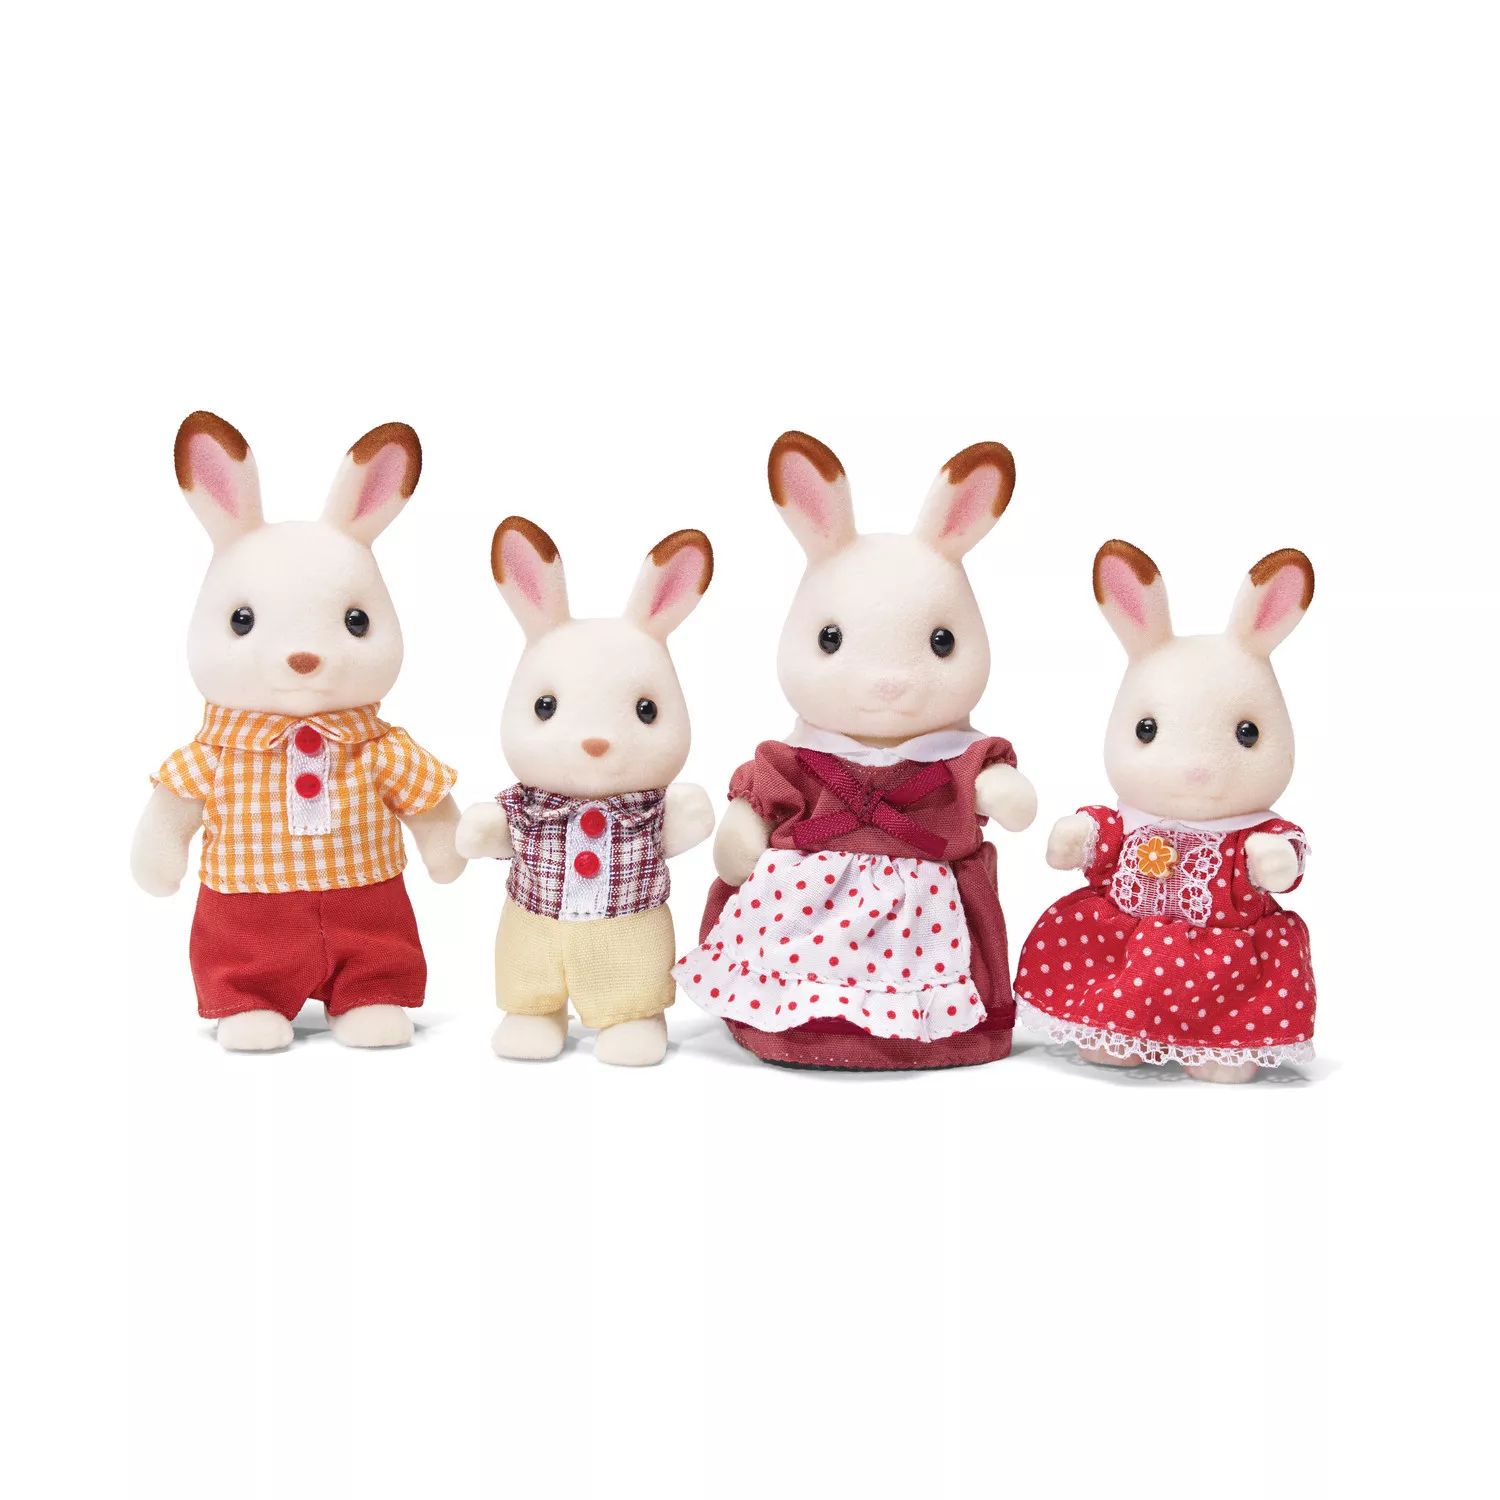 Семейный набор Calico Critters Hopscotch Rabbit Family из 4 коллекционных фигурок кукол Calico Critters